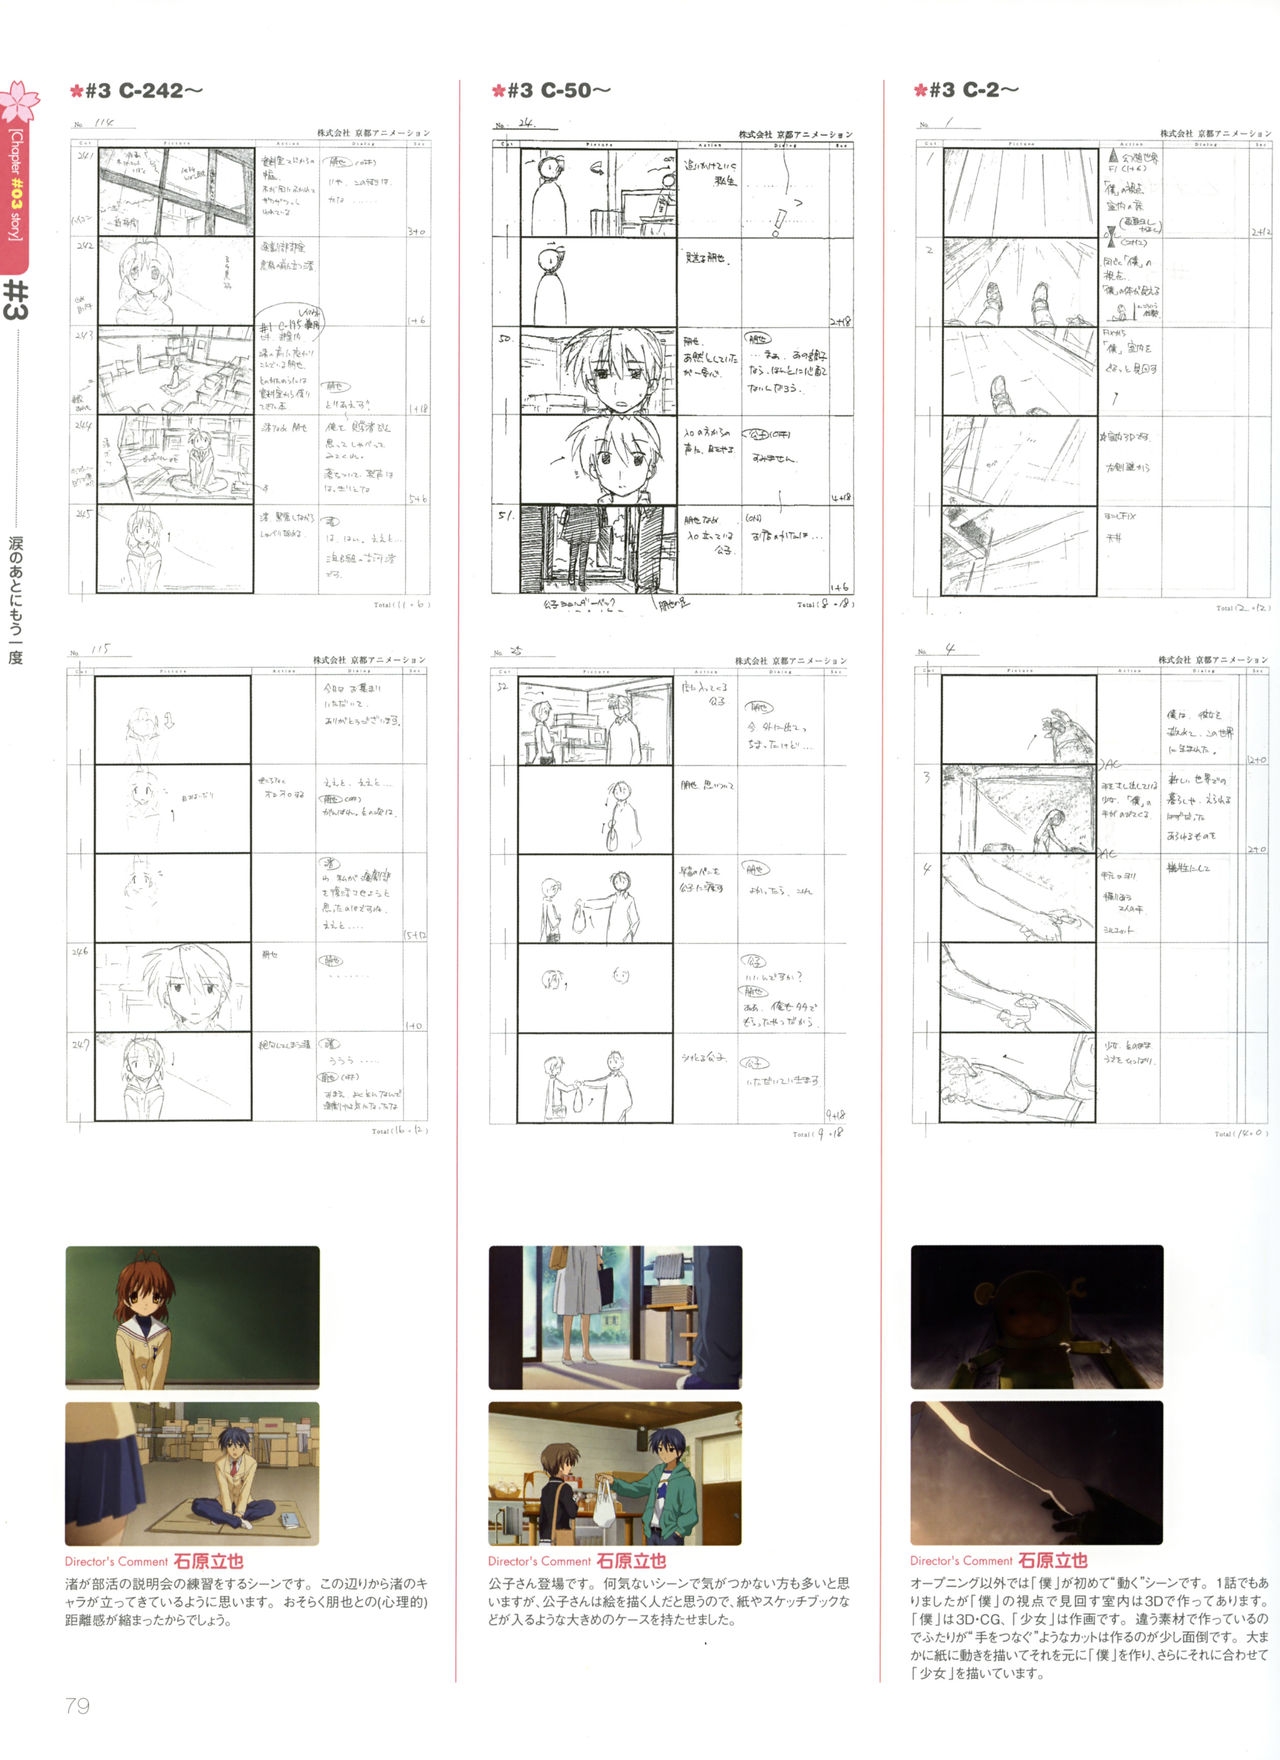 Clannad TV Animation Visual Fan Book 81